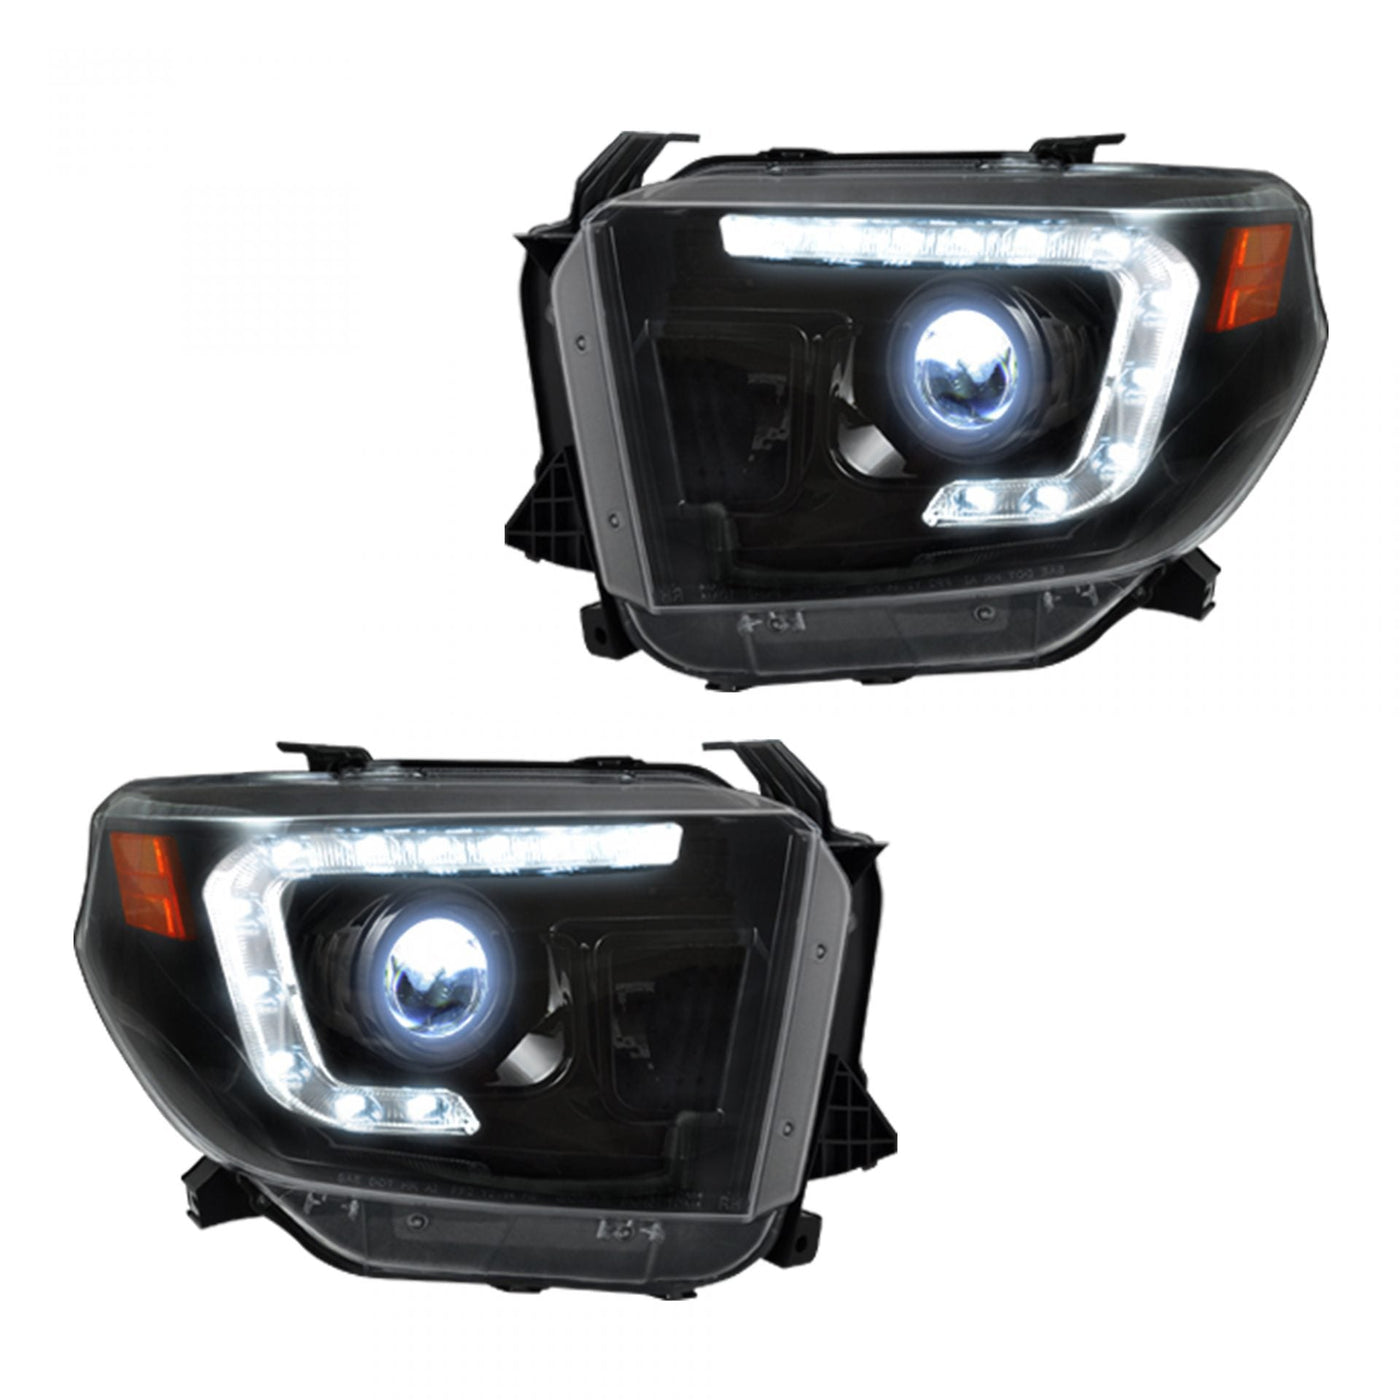 Toyota Projector Headlights, Tundra Projector Headlights, Tundra 14-21 Headlights, Smoked/Black Headlights, Recon Projector Headlights